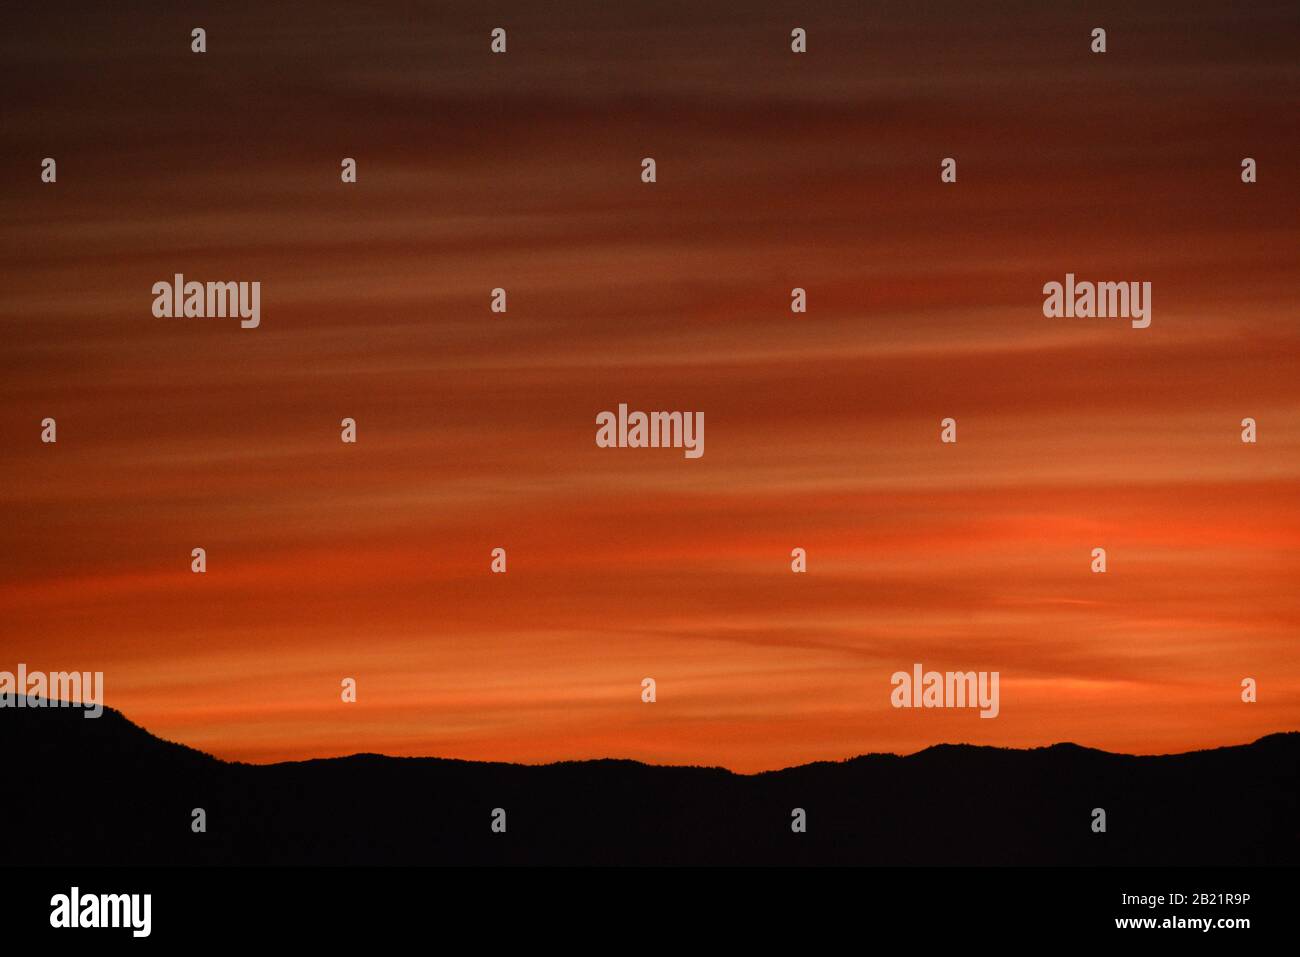 Orange sunset over silhouette mountains in Arizona Stock Photo